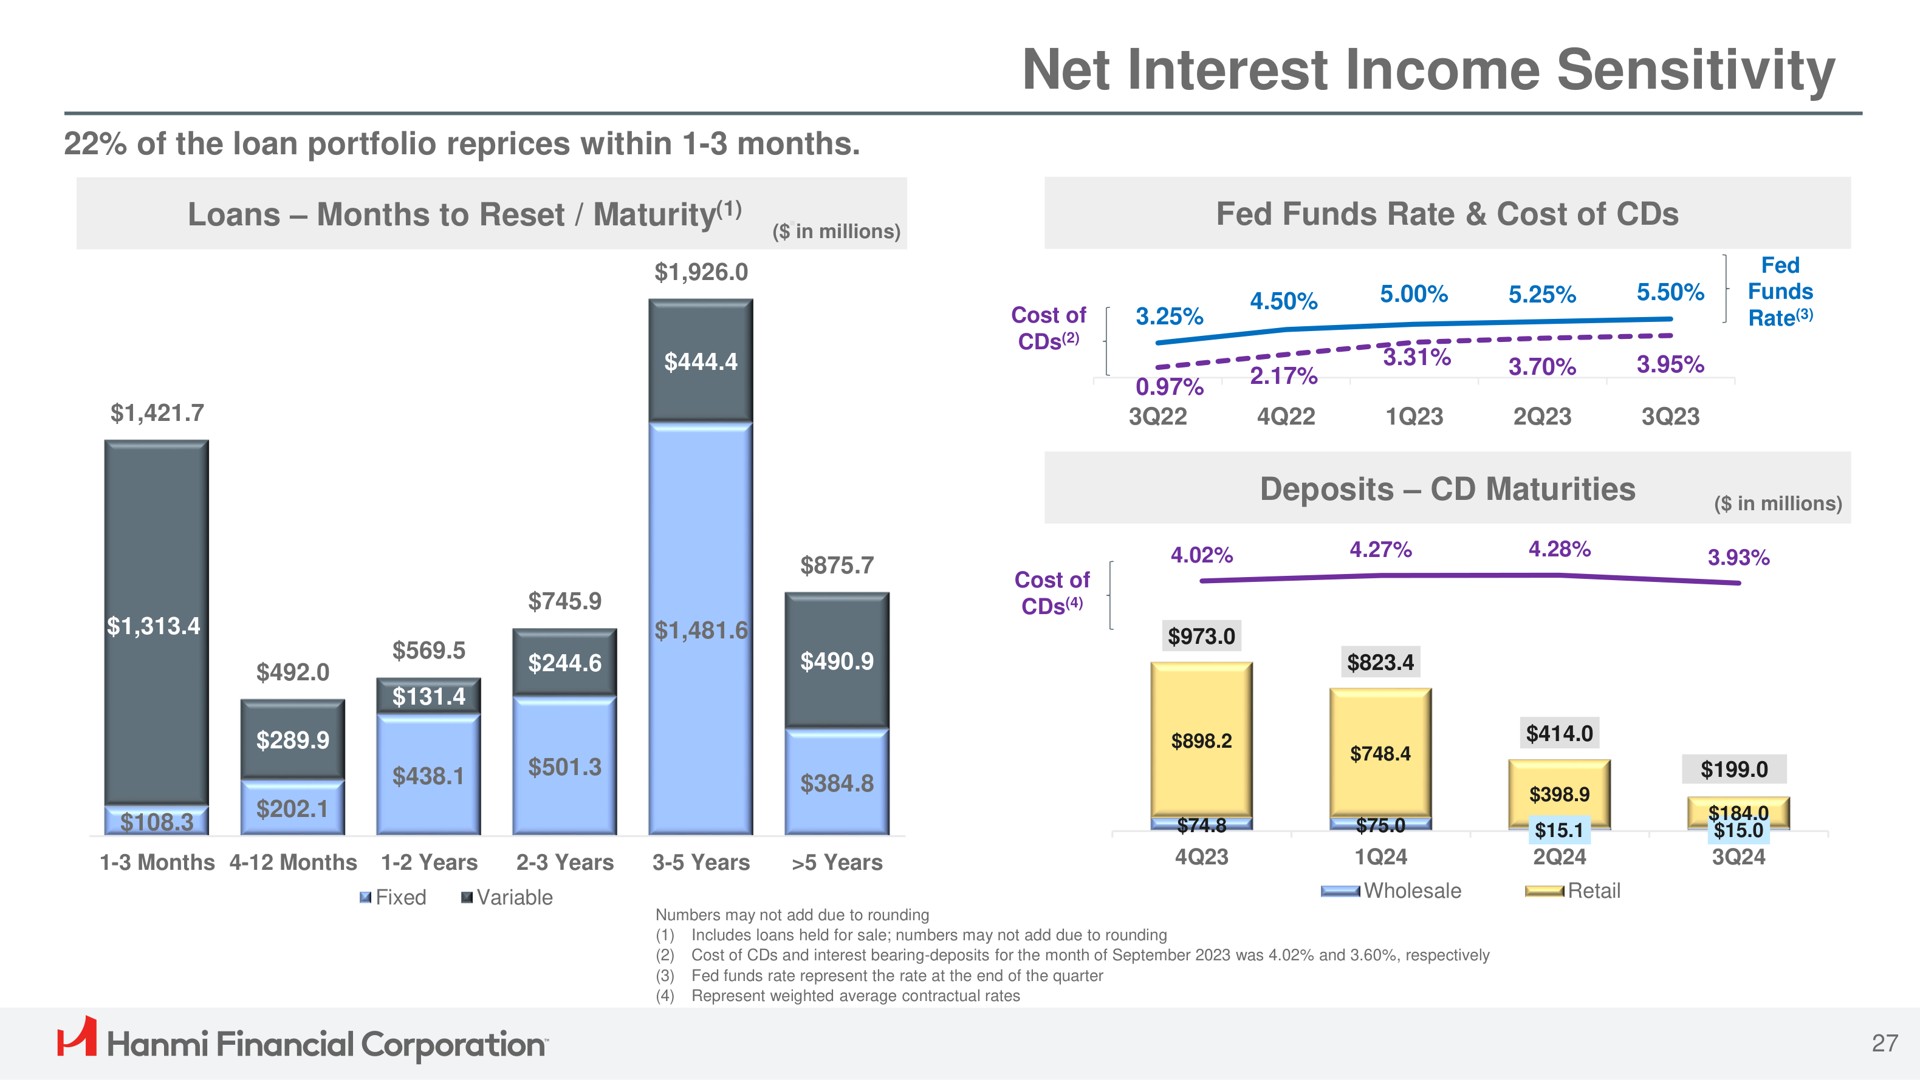 net interest income sensitivity financial corporation | Hanmi Financial